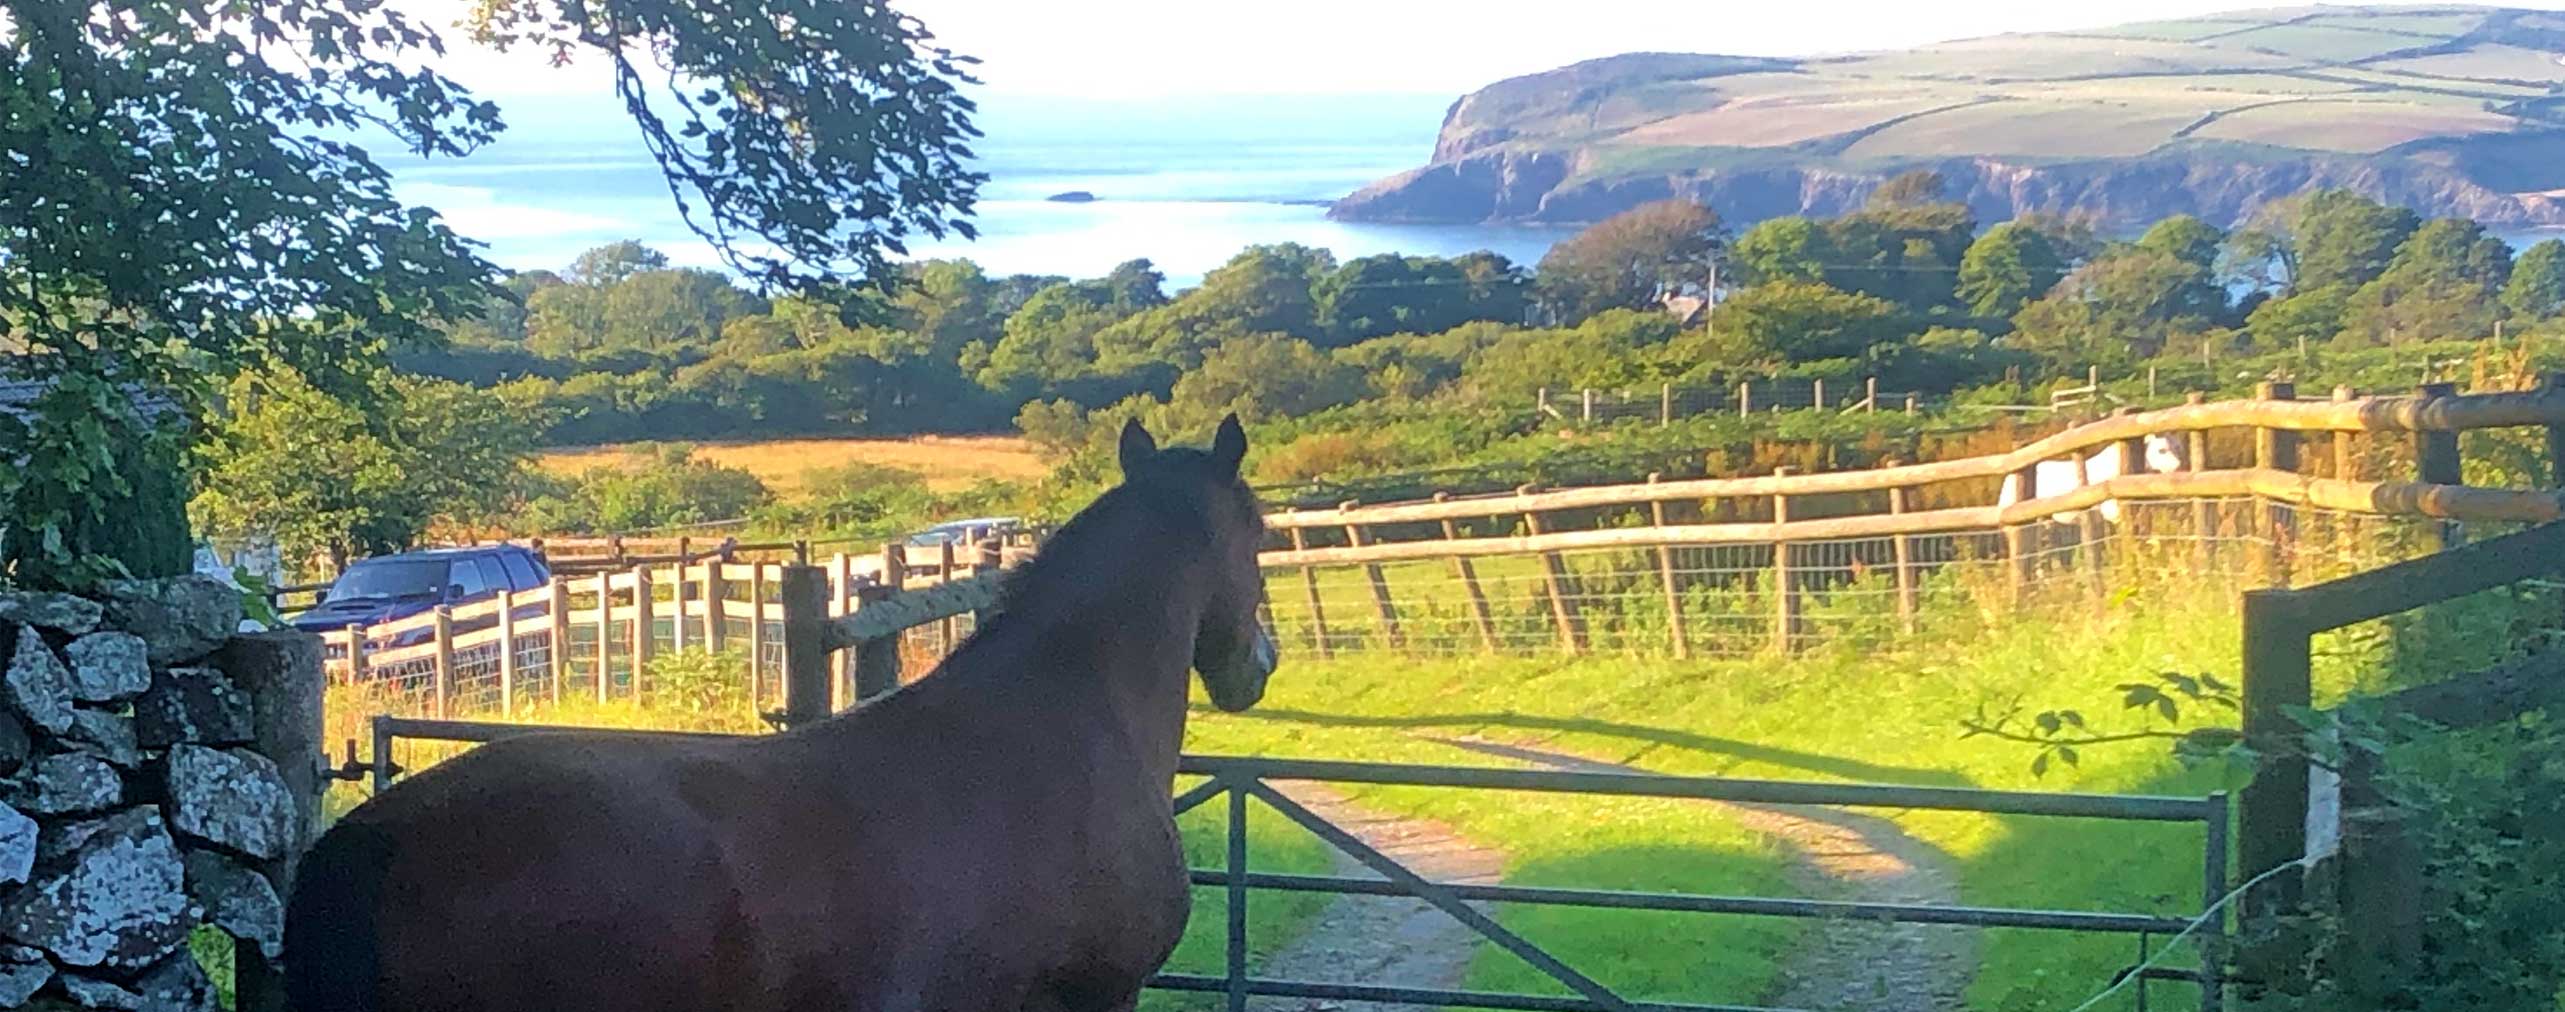 Pony enjoying the view